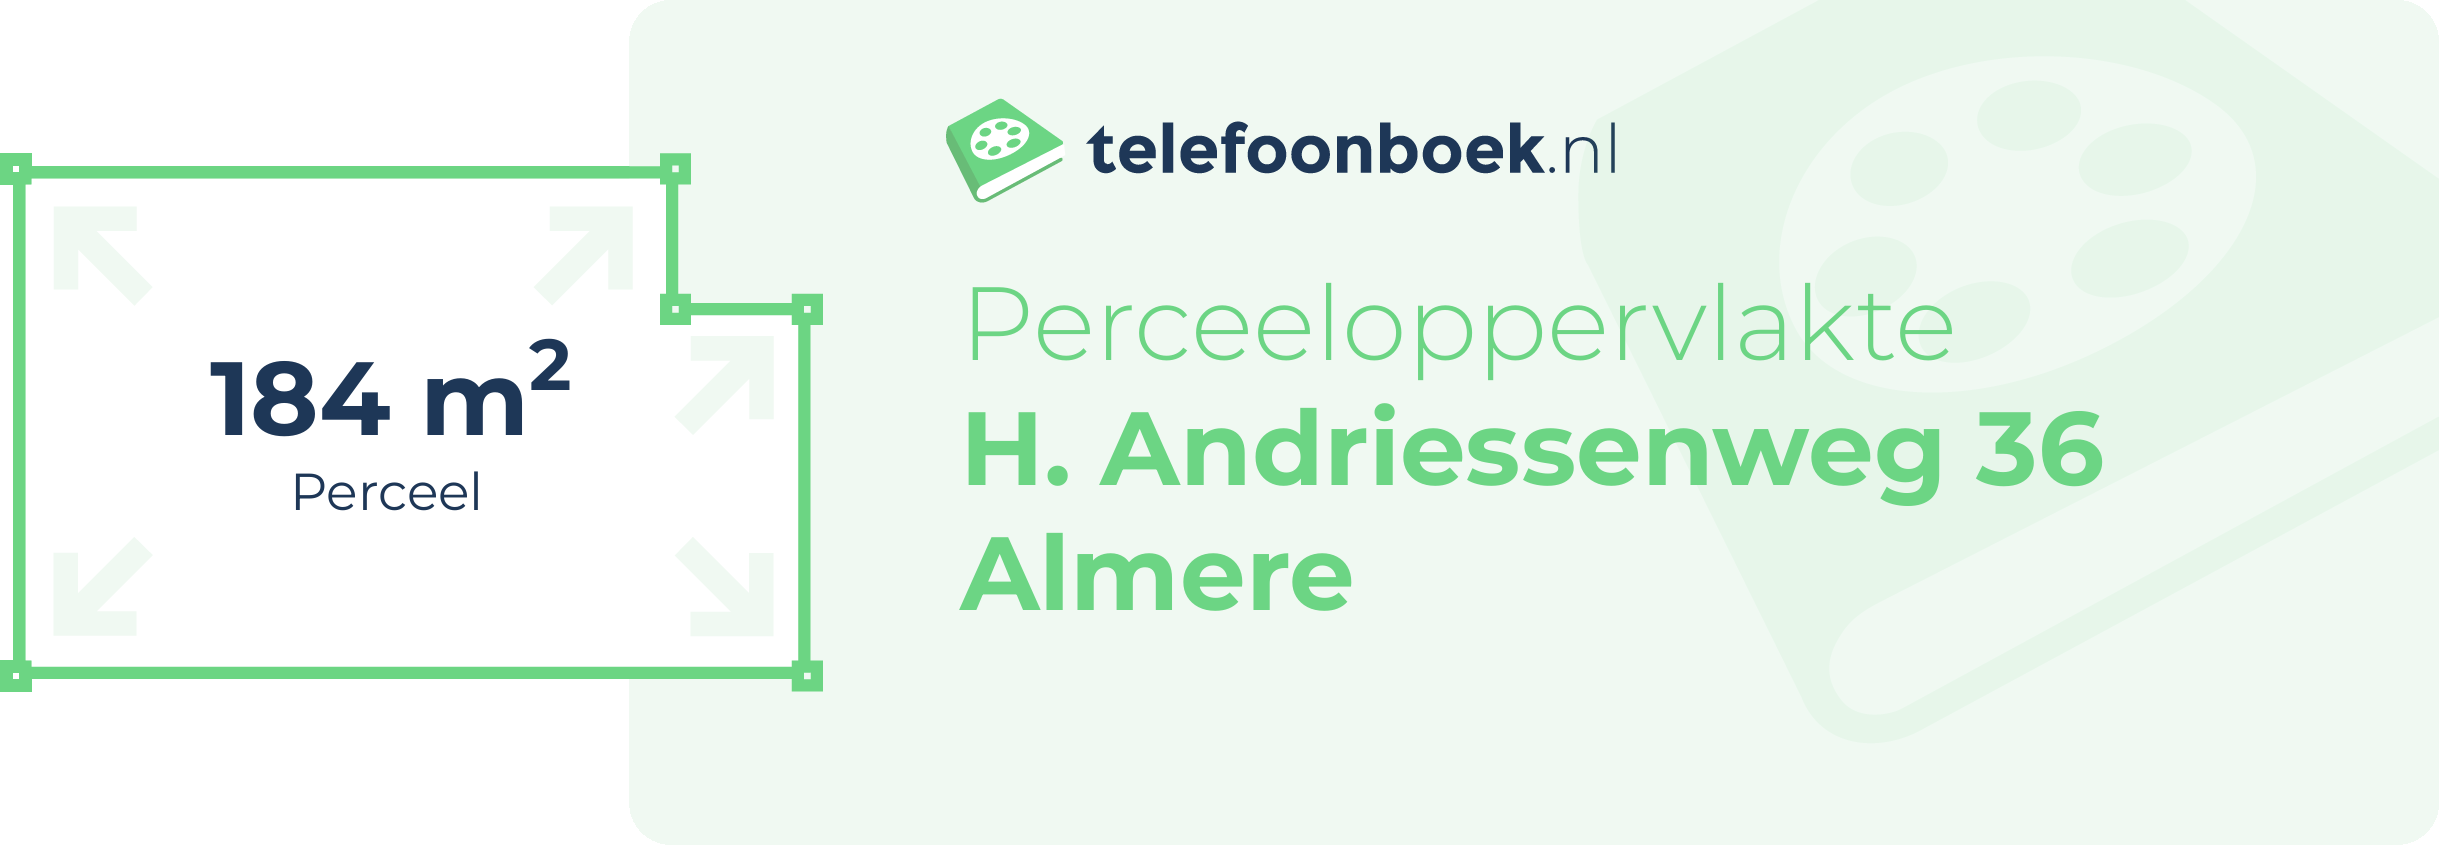 Perceeloppervlakte H. Andriessenweg 36 Almere